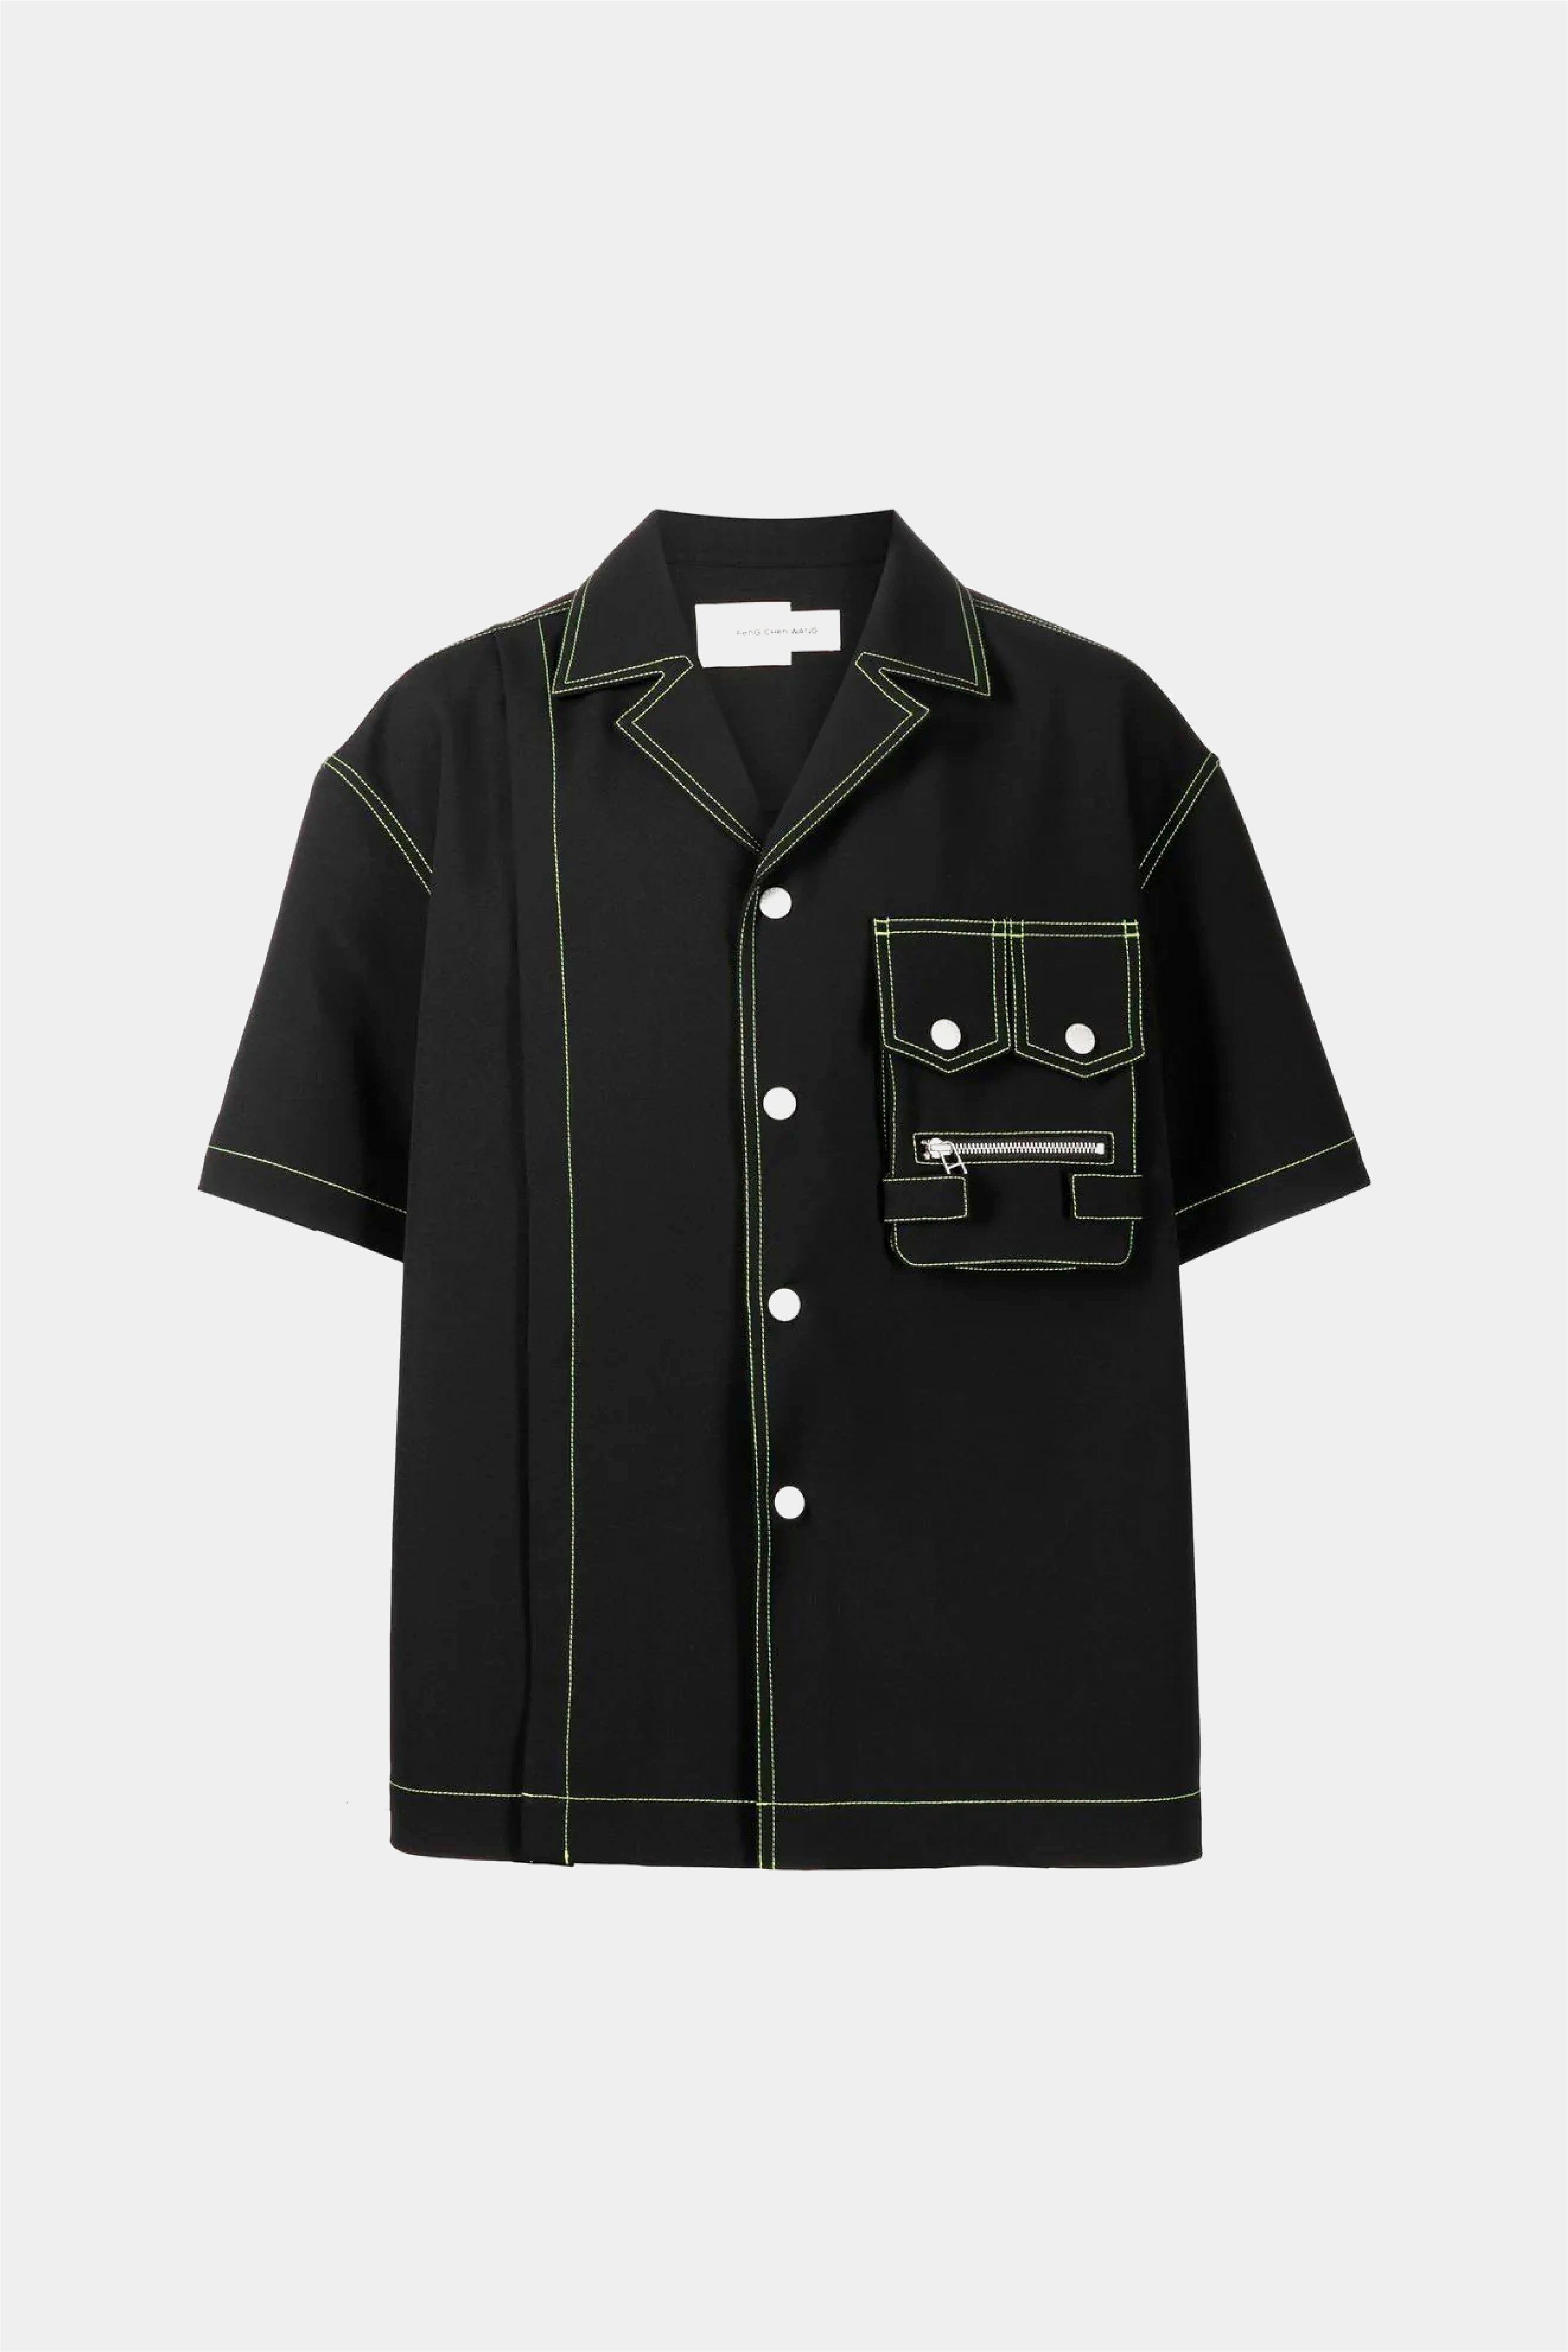 Selectshop FRAME - FENG CHEN WANG 3D Pocket Hawaiian Shirt Shirts Concept Store Dubai